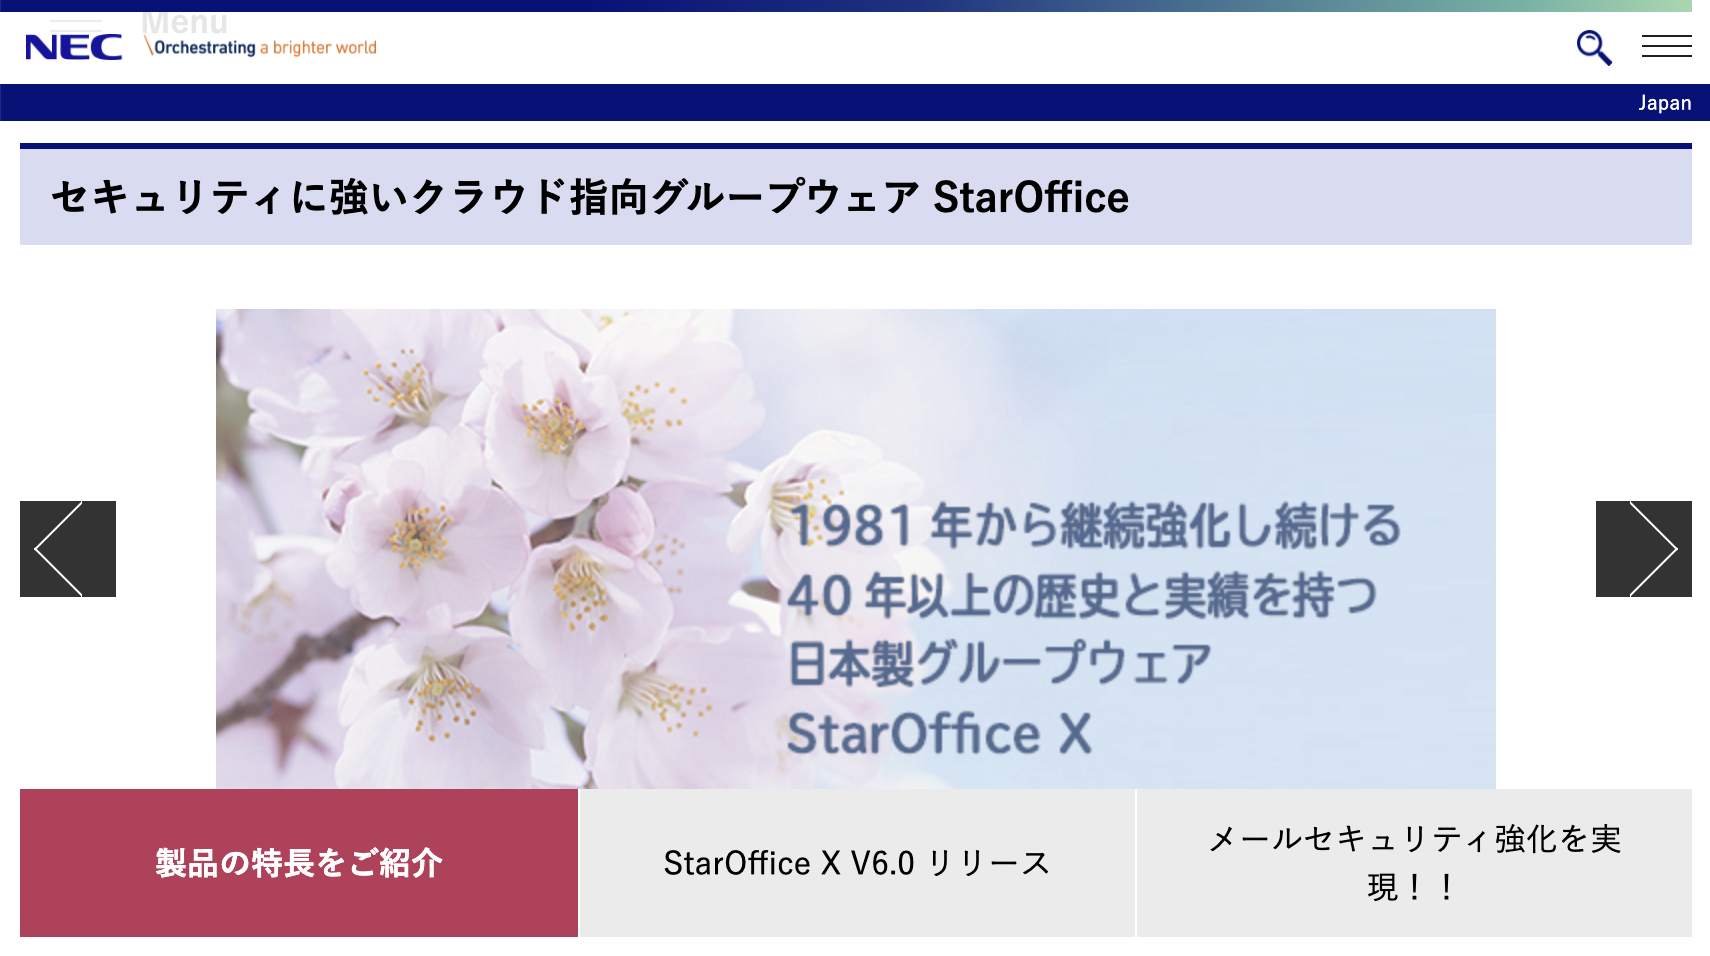  Star Office